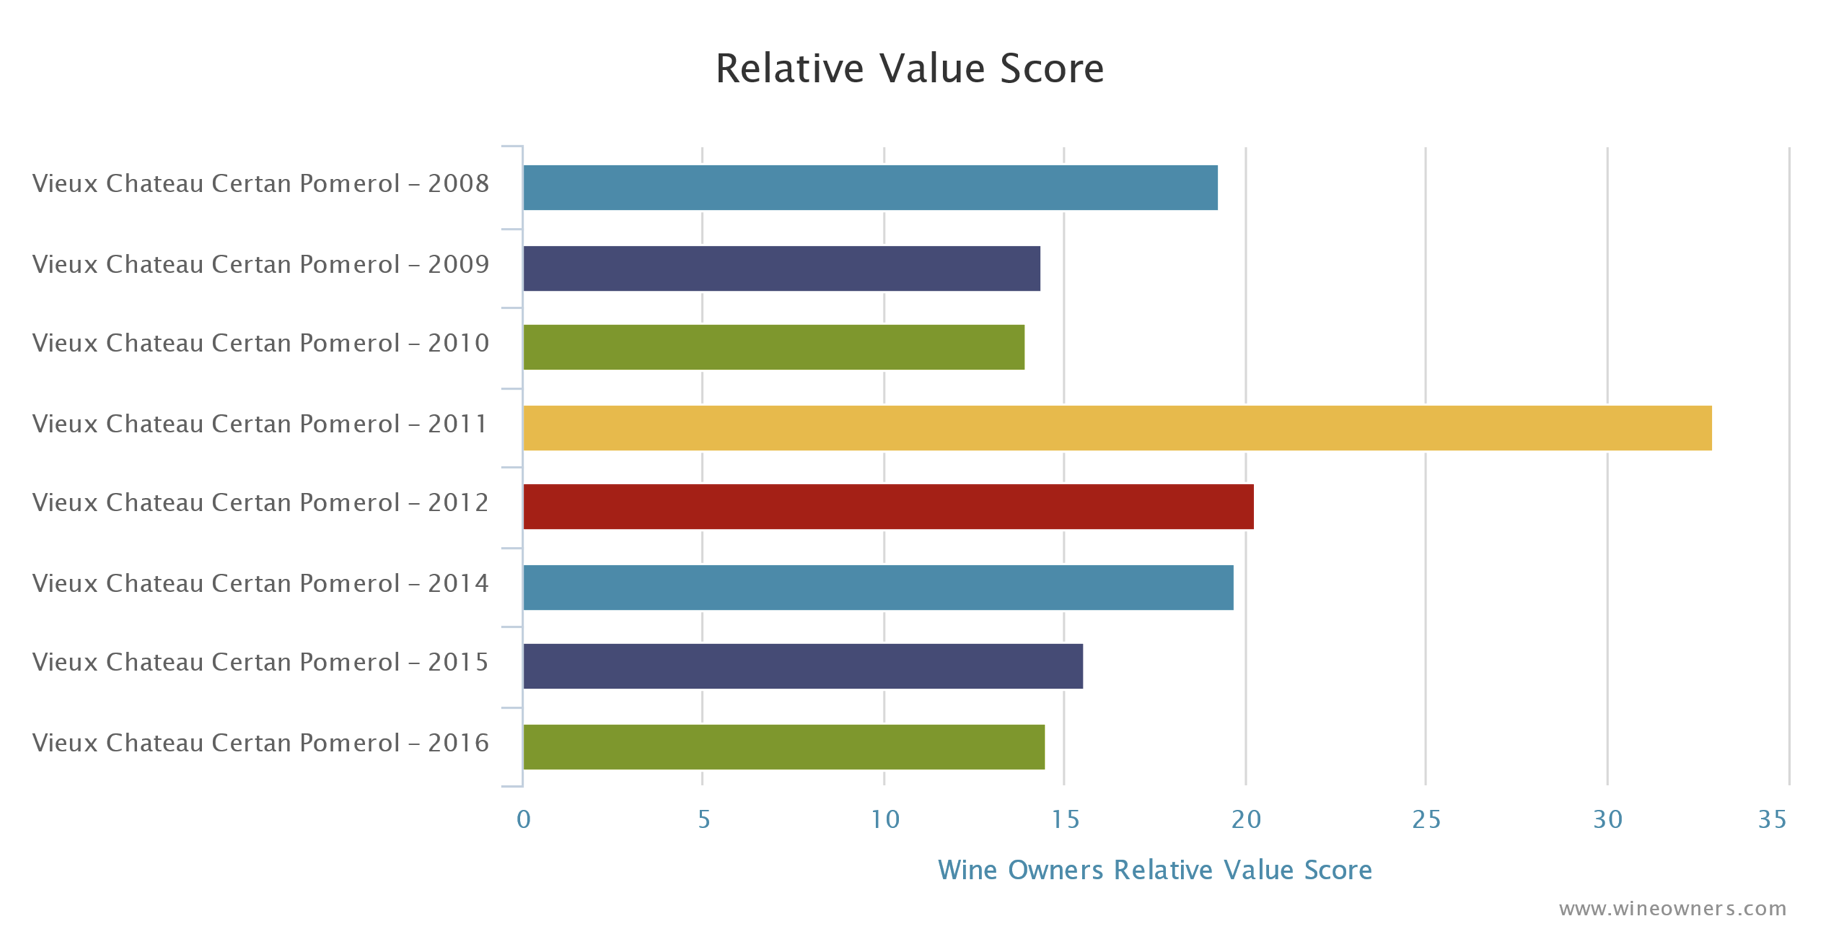 Vieux Chateau Certan - Relative Value Score - Wine Owners